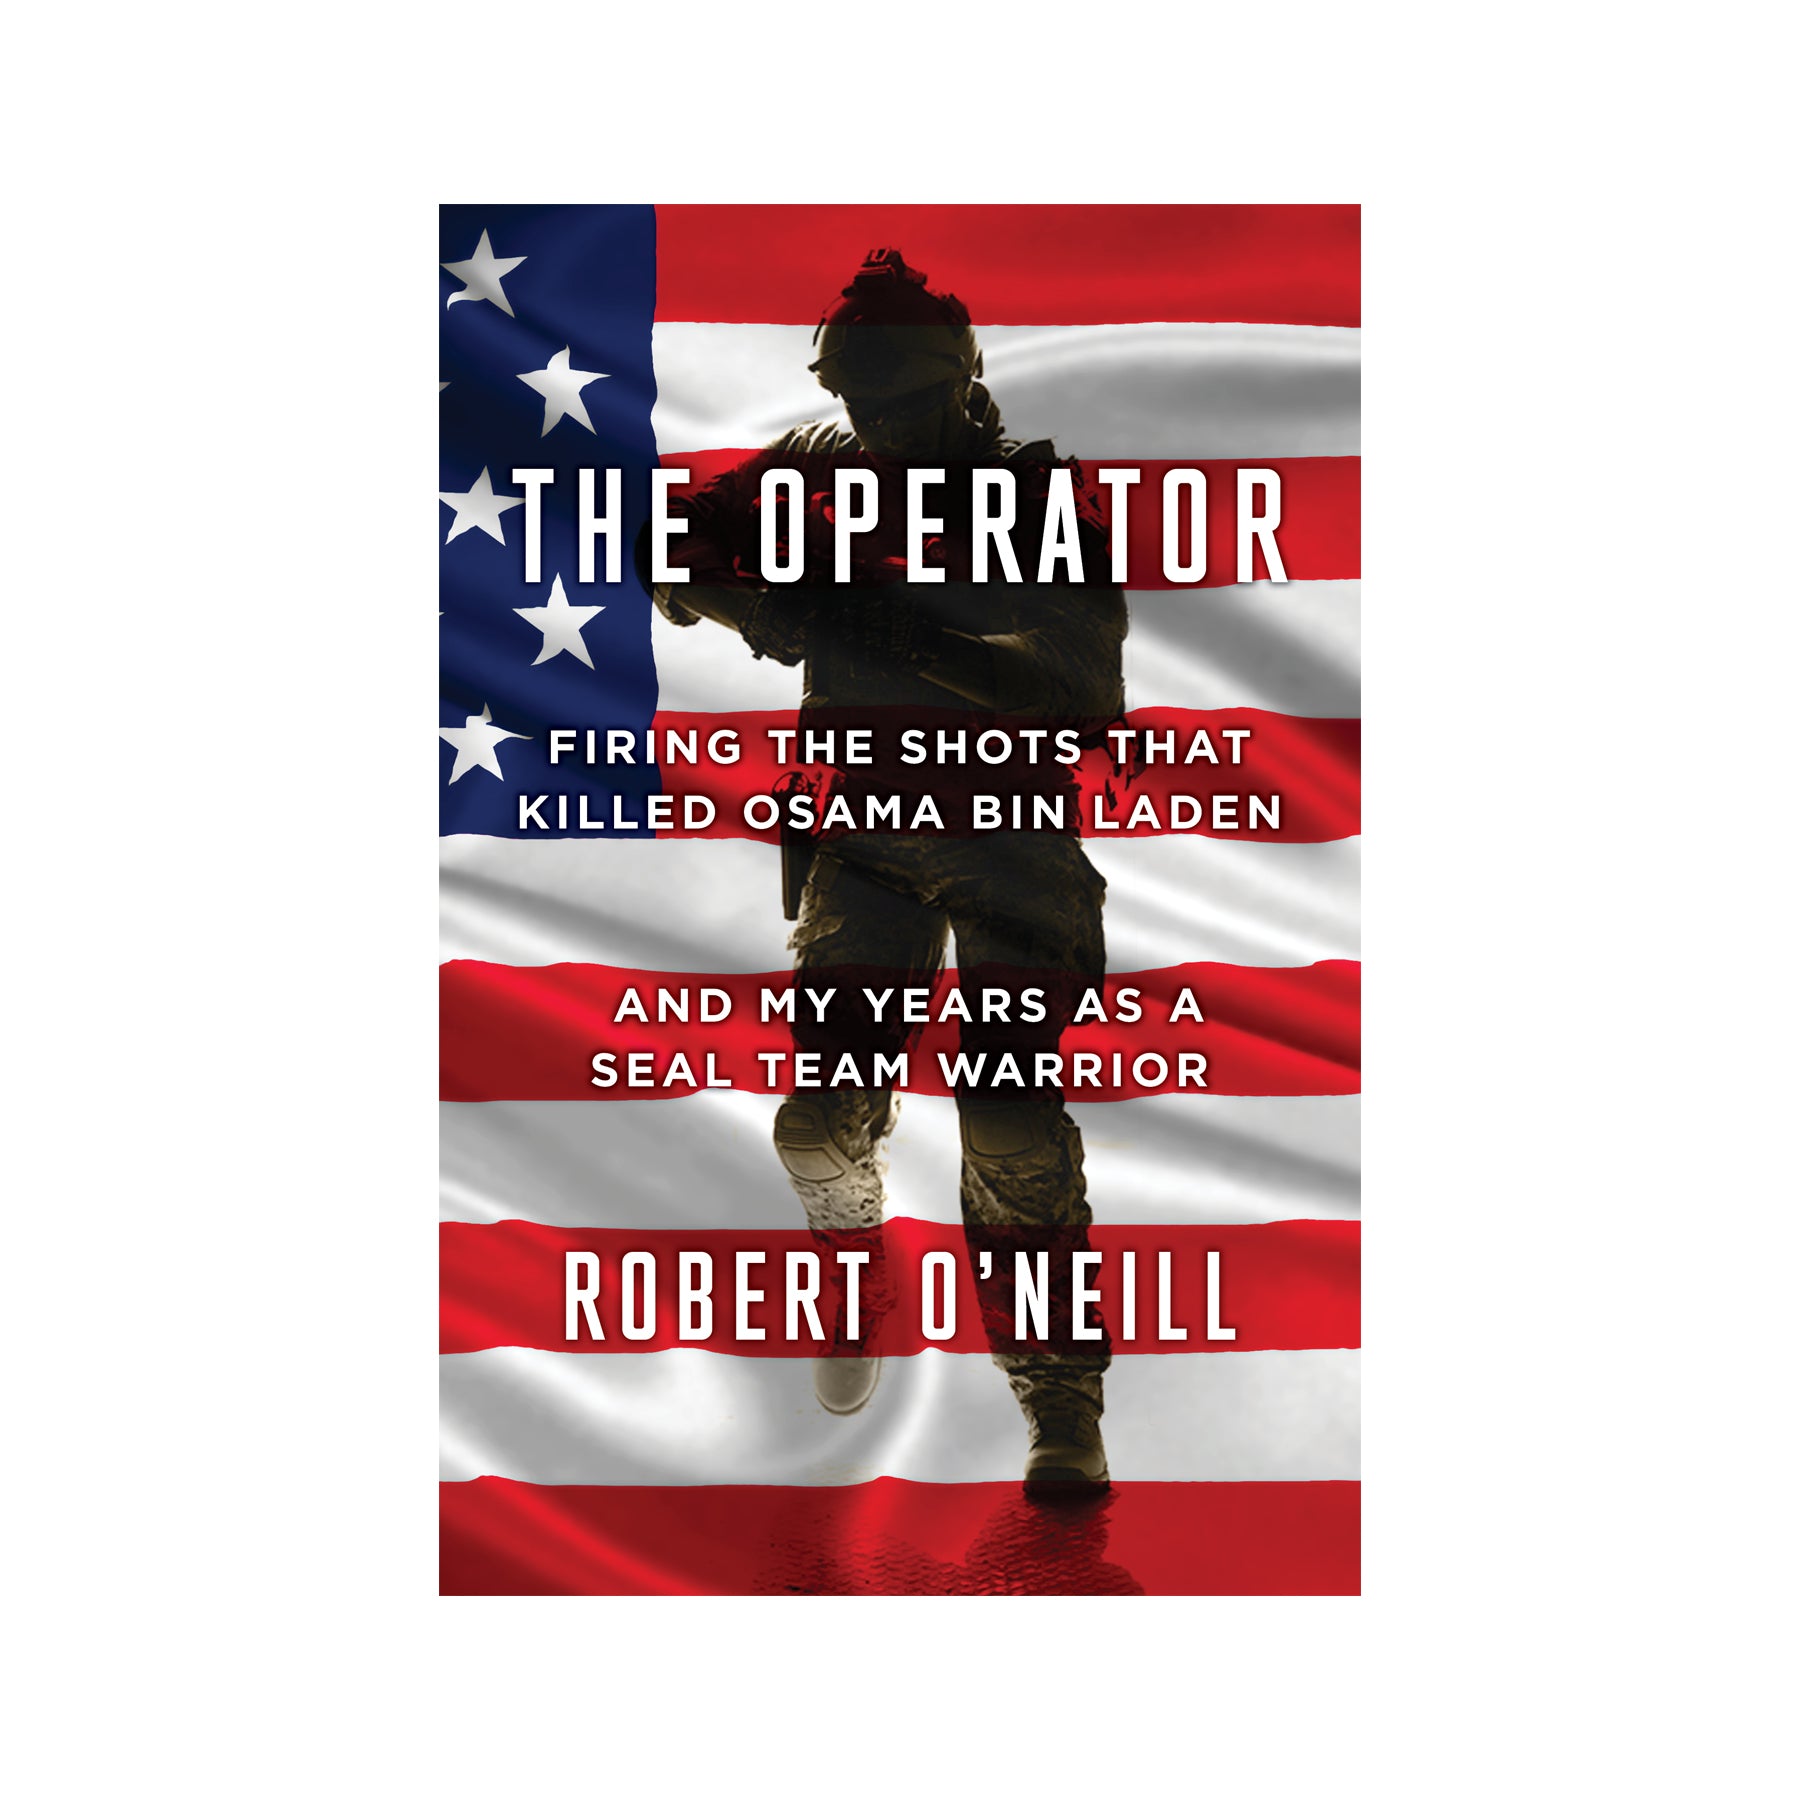 The Operator Robert O'Neill book paperback RJO